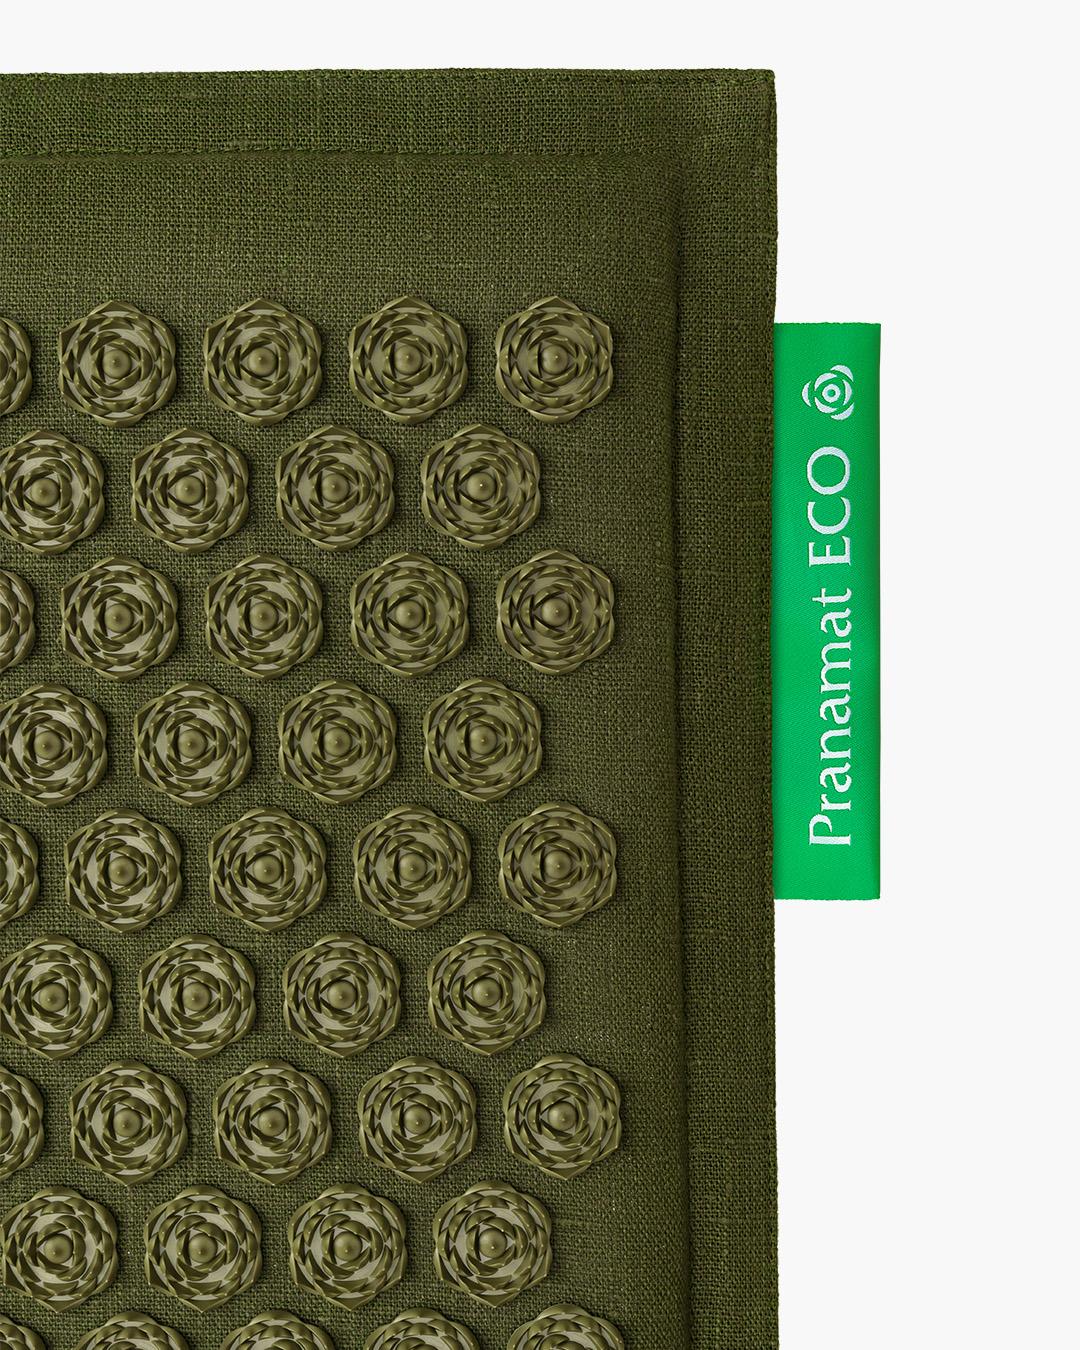 Pranamat ECO Set (Pranamat ECO + PranaPillow + Mini Mat) Green Edition